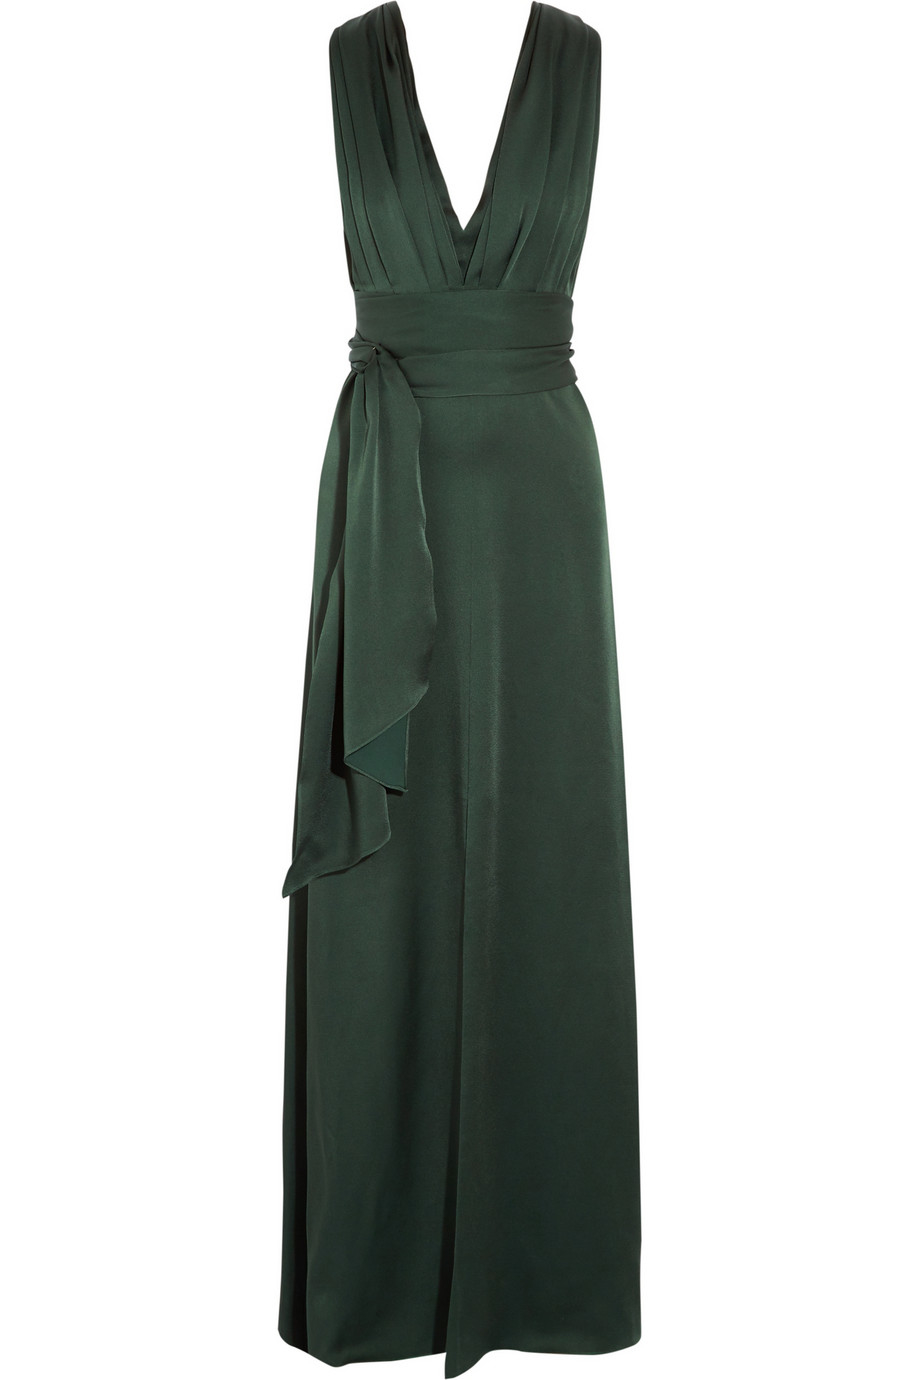 Lyst - Victoria Beckham Draped Satin Gown in Green